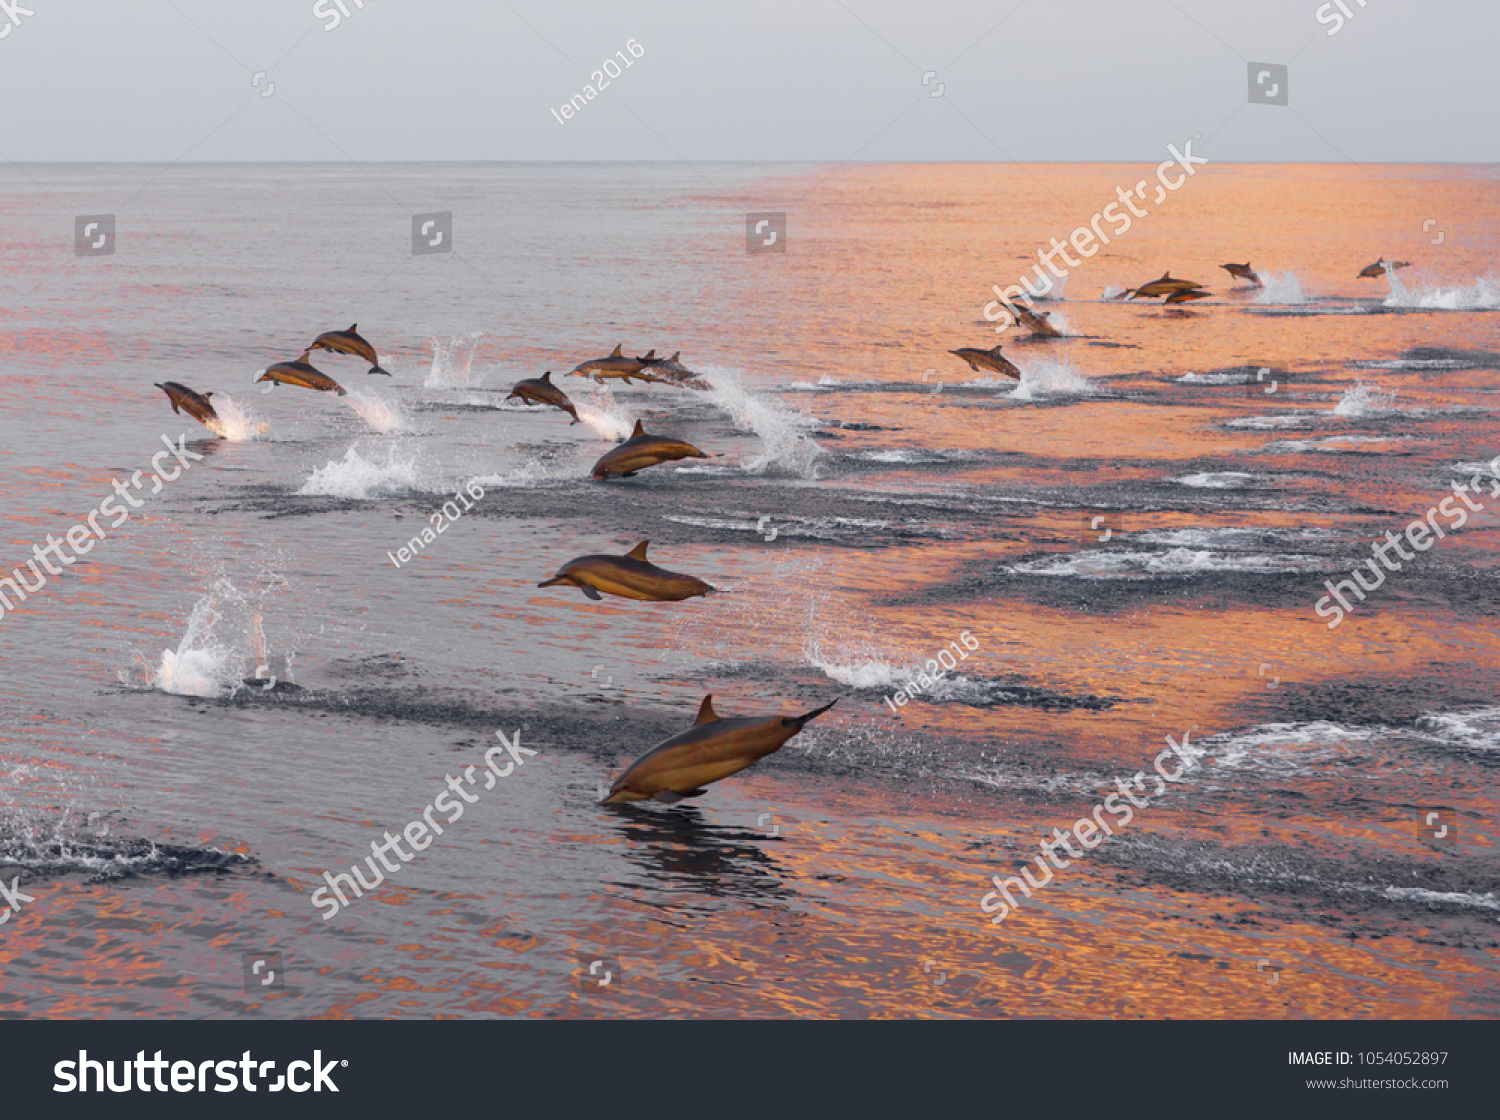 Sea dolphin Images, Stock Photos & Vectors | Shutterstock